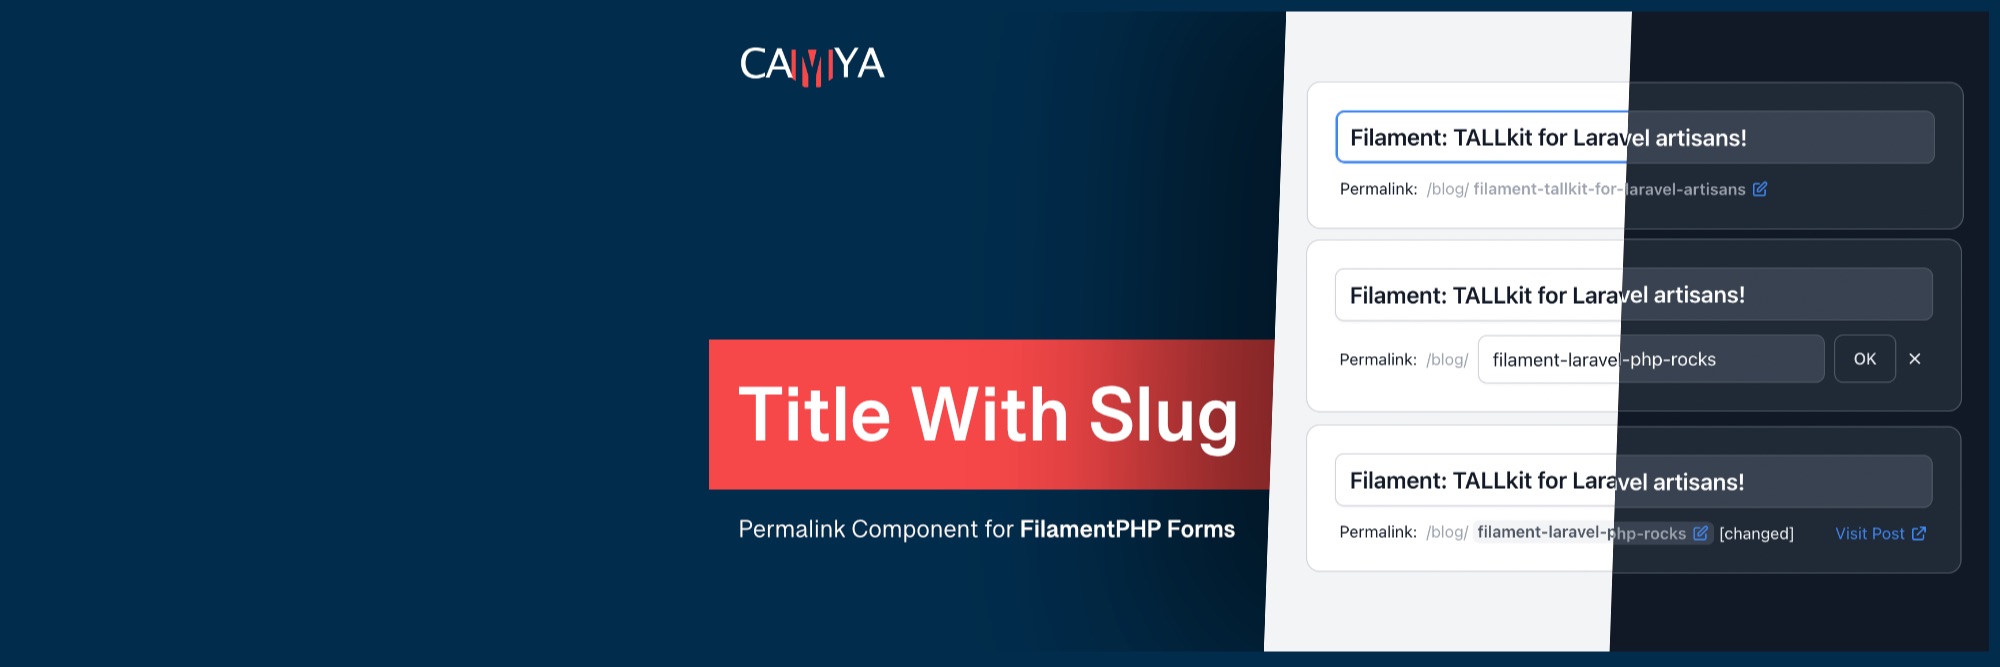 camya-filament-title-with-slug_teaser-github.jpg